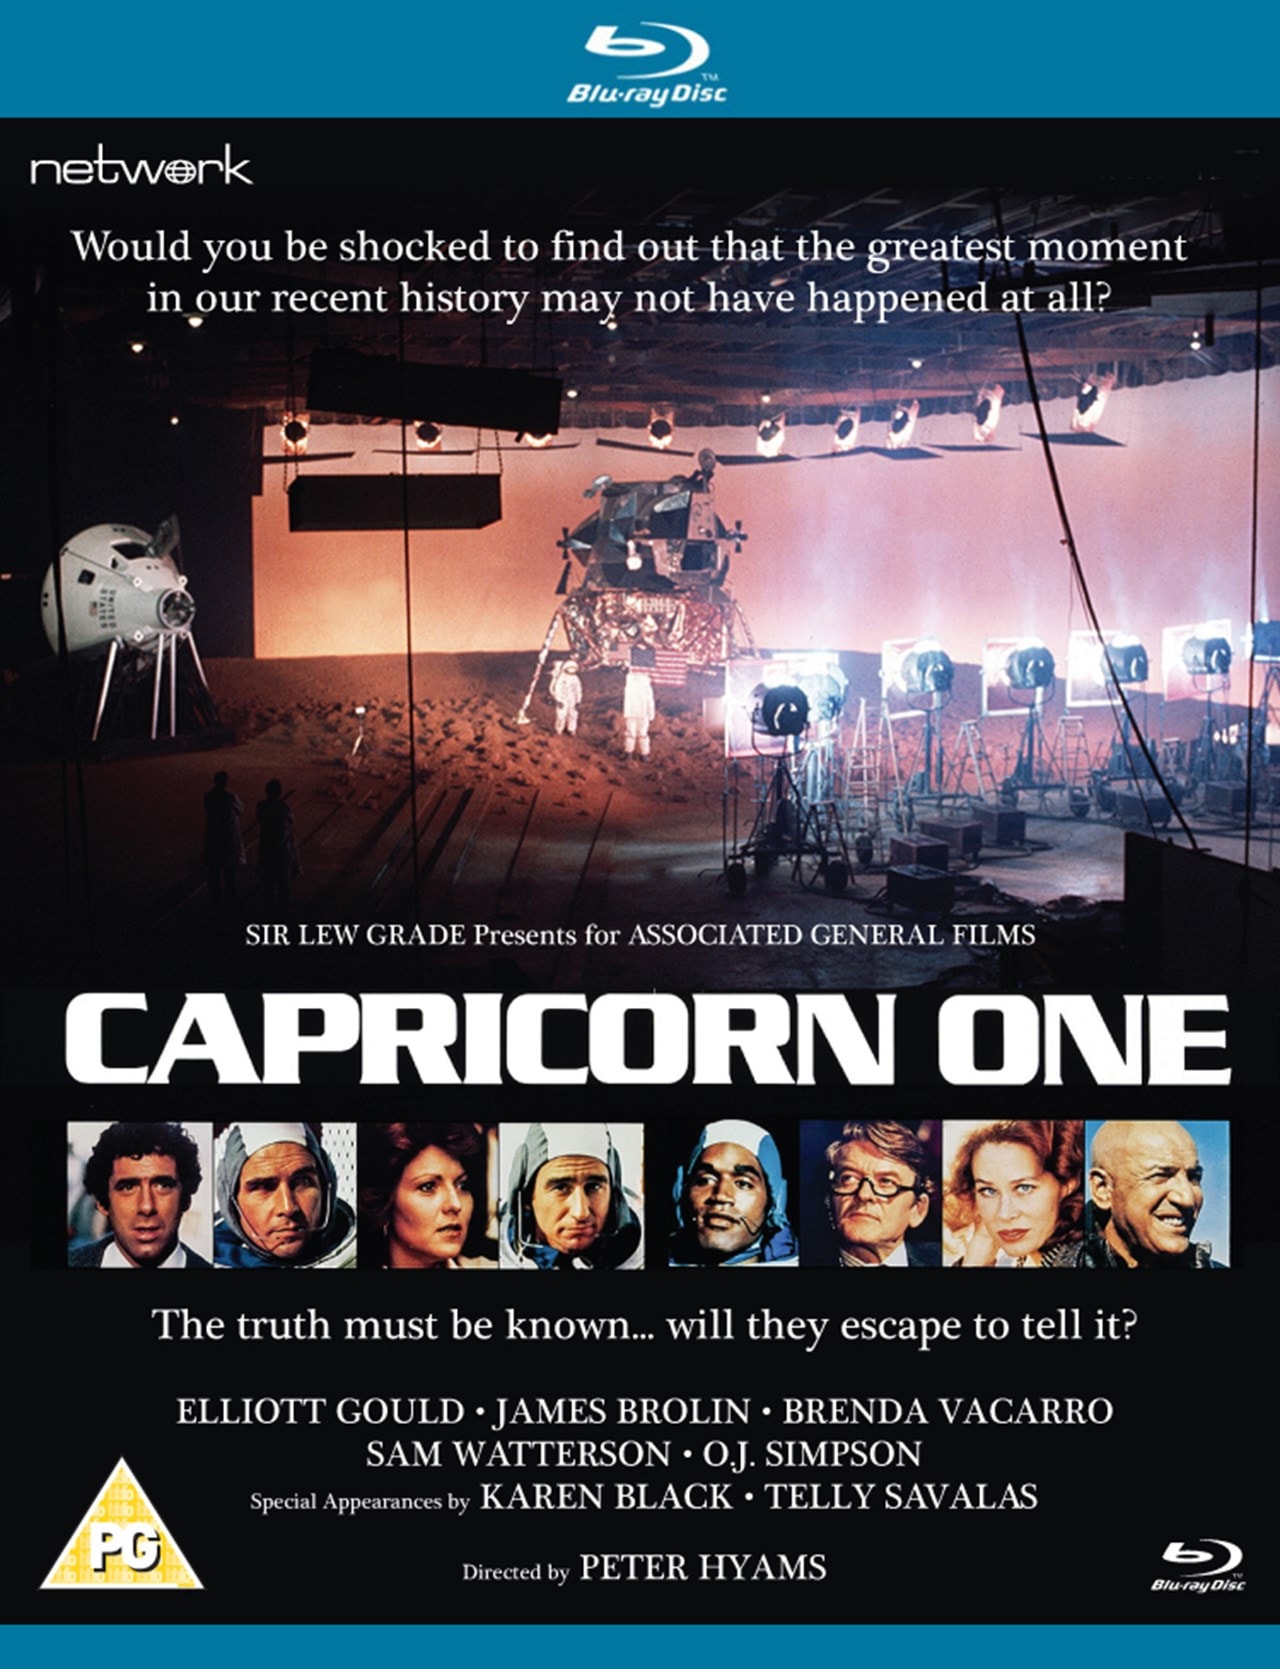 capricorn one movie